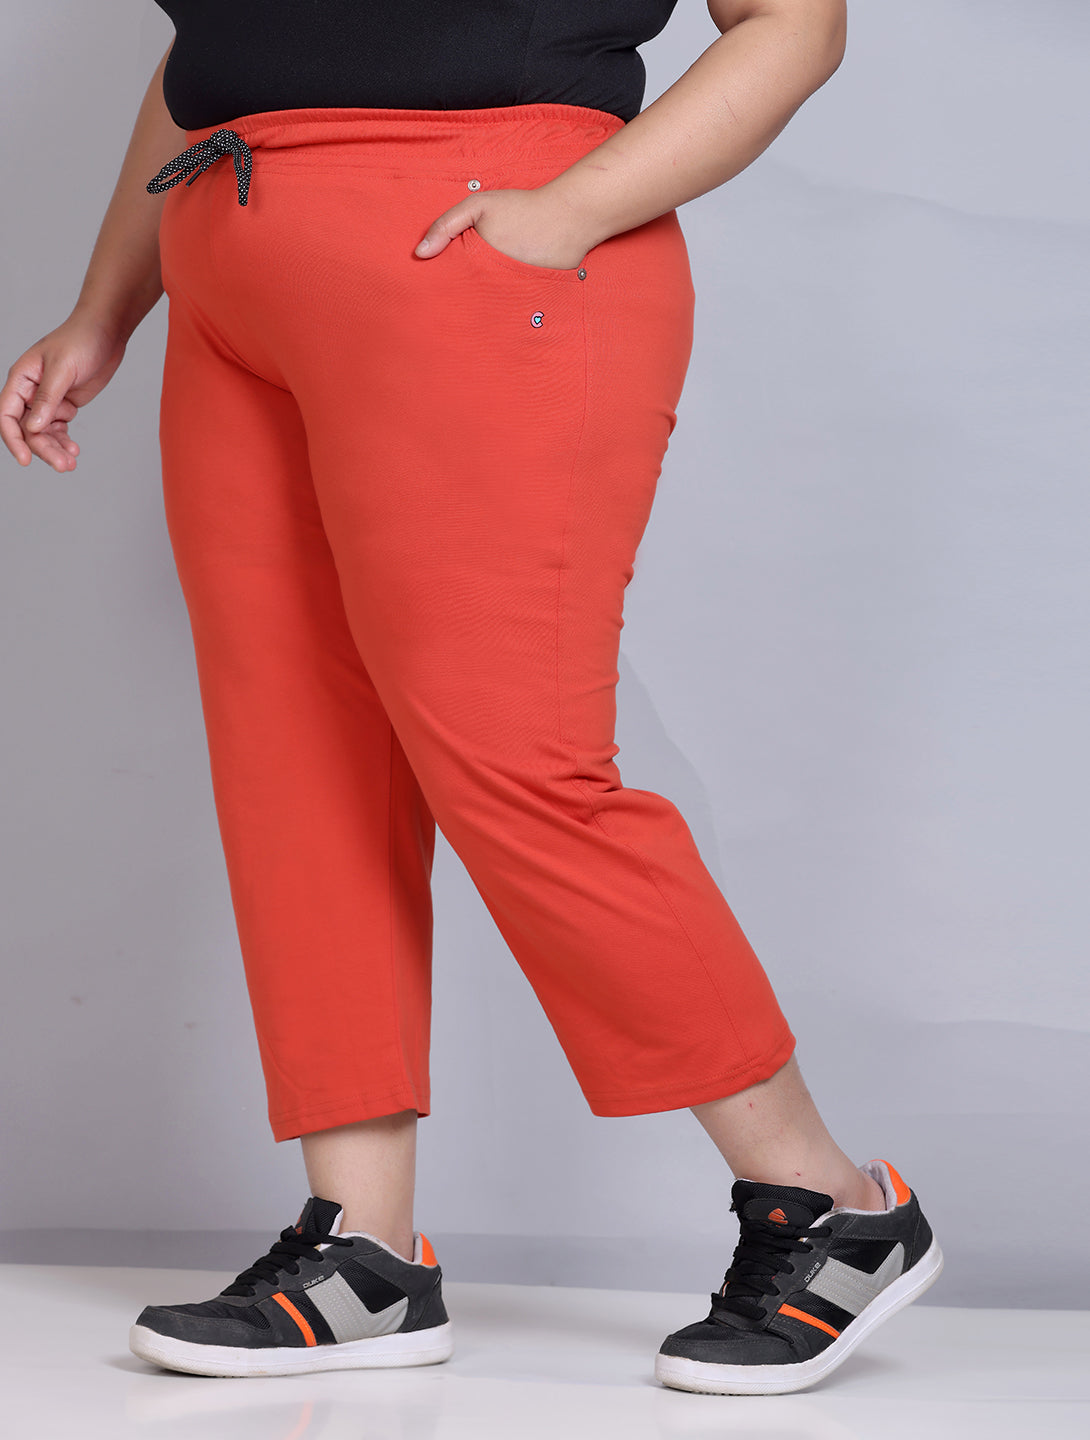 Stylish Tangy Orange Cotton Half Capris For Women online in India